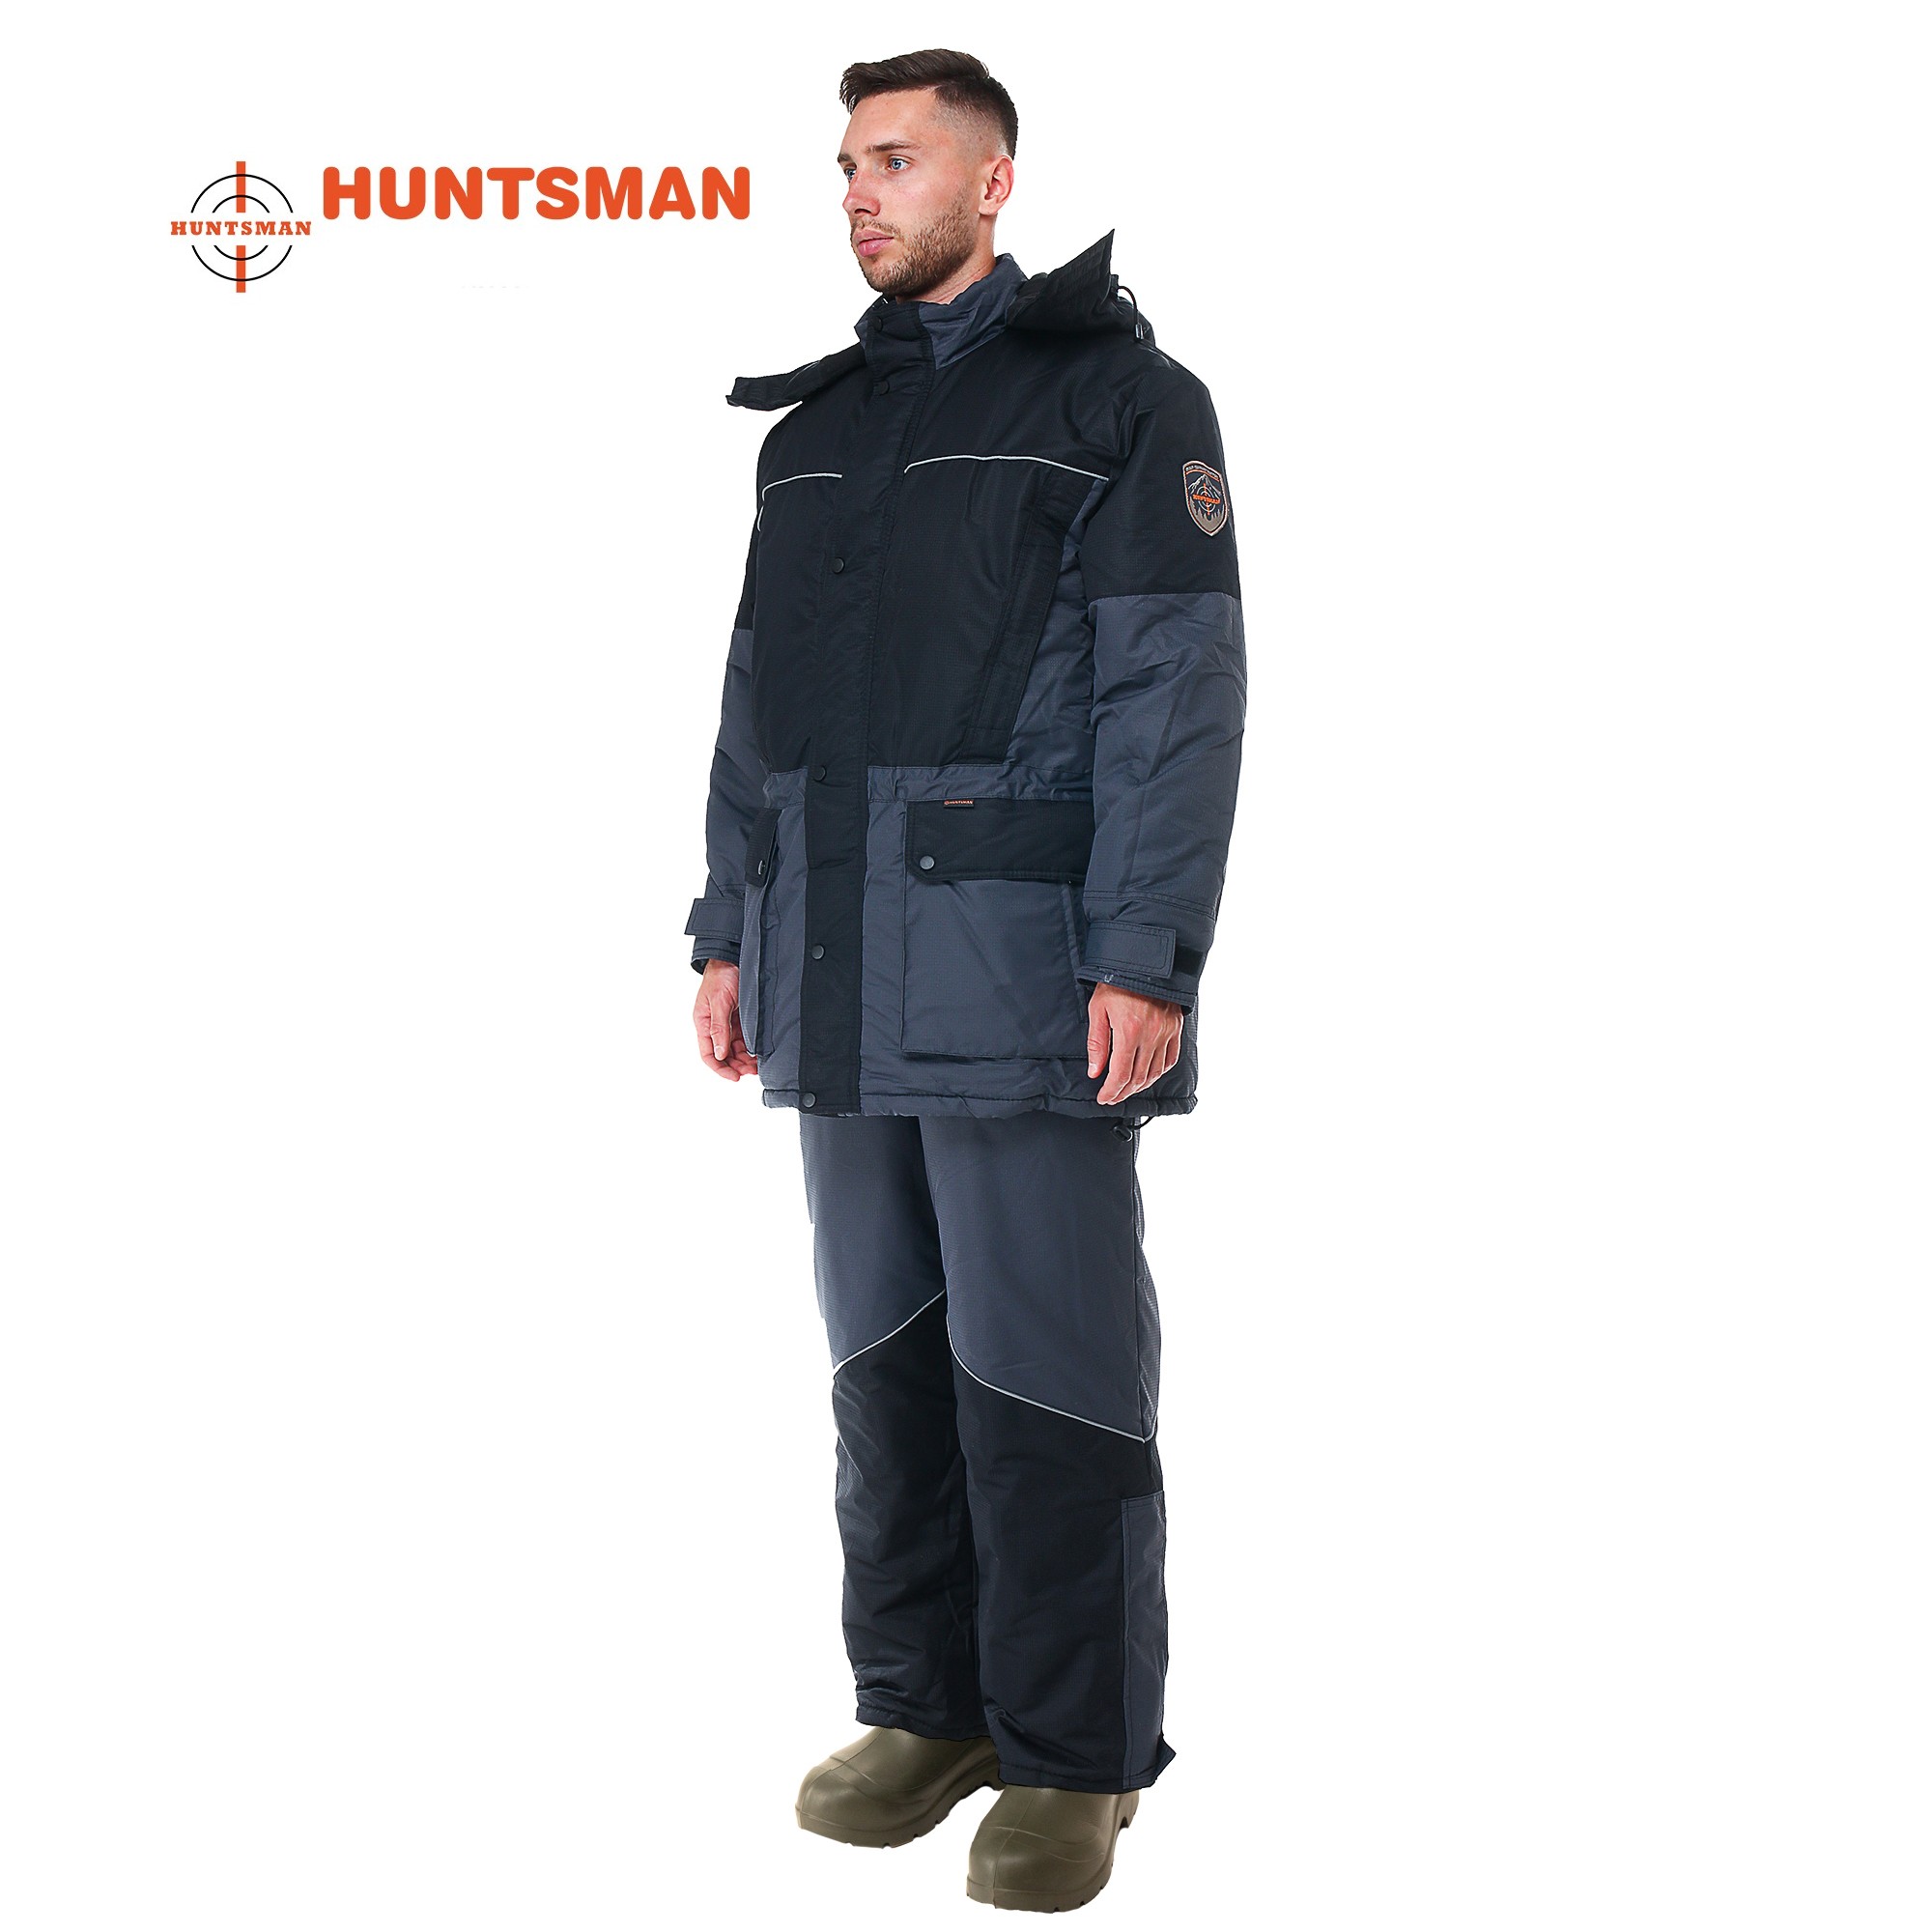 Žieminis kostiumas HUNTSMAN ARKTIKA melsva/juoda Nylon Taslan Dobby -40C